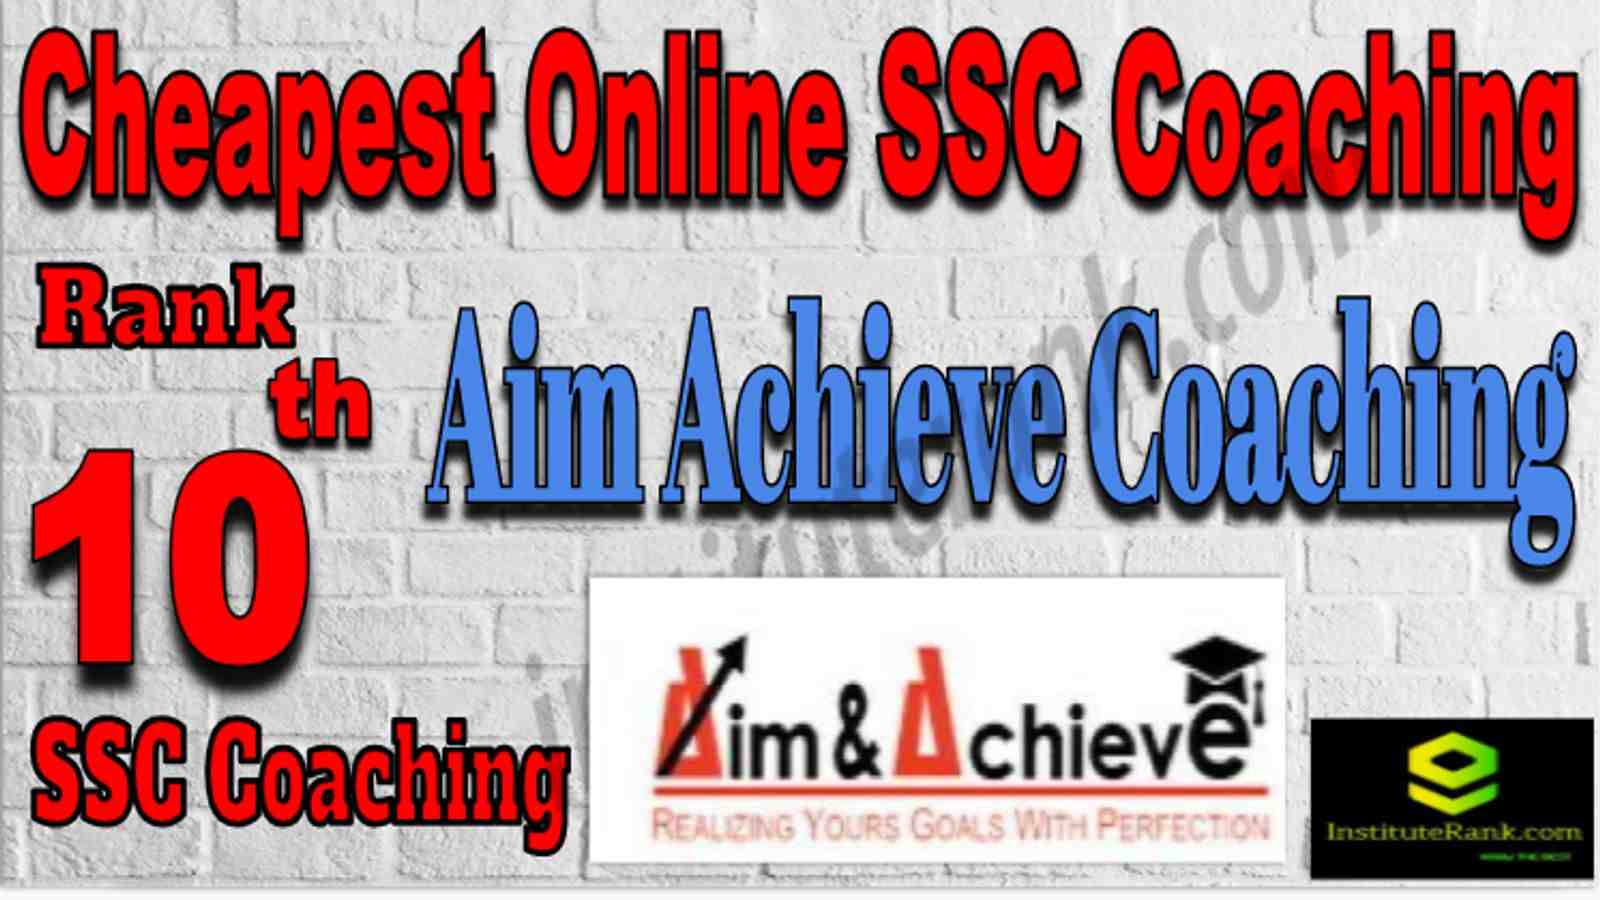 Rank 10 Cheapest Online SSC Coaching